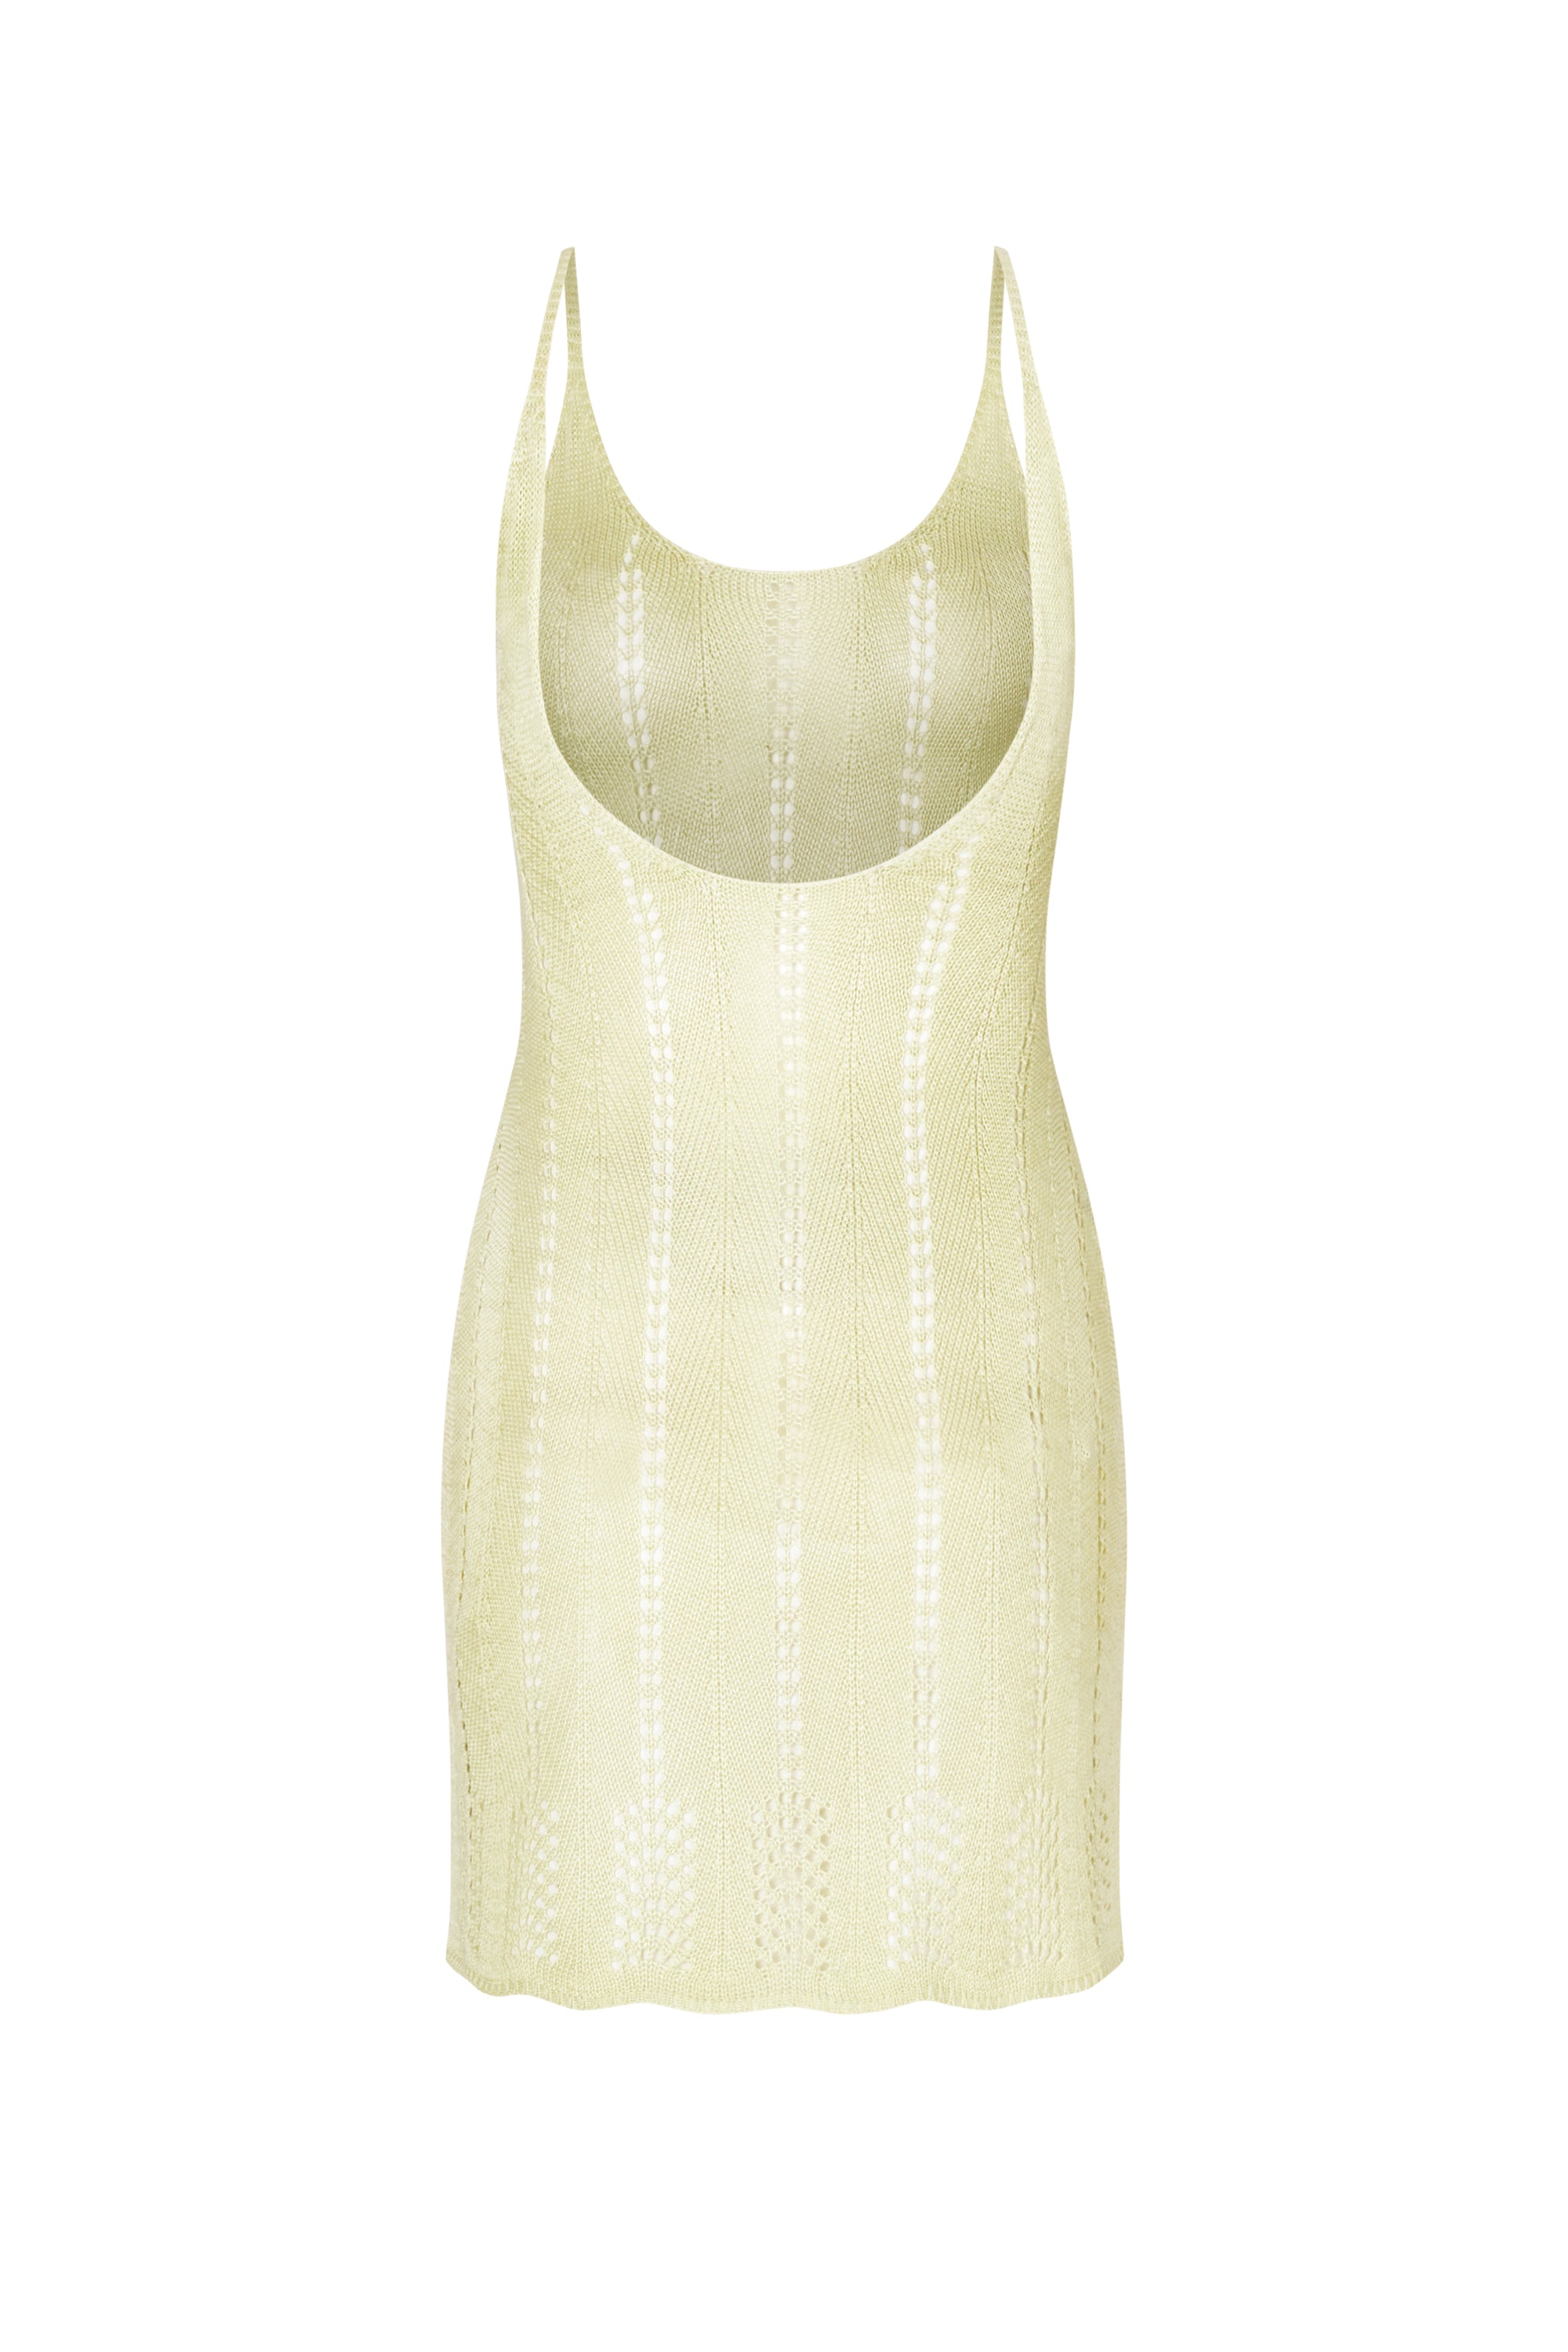 flook the label ayva mini dress lemon knit product image back